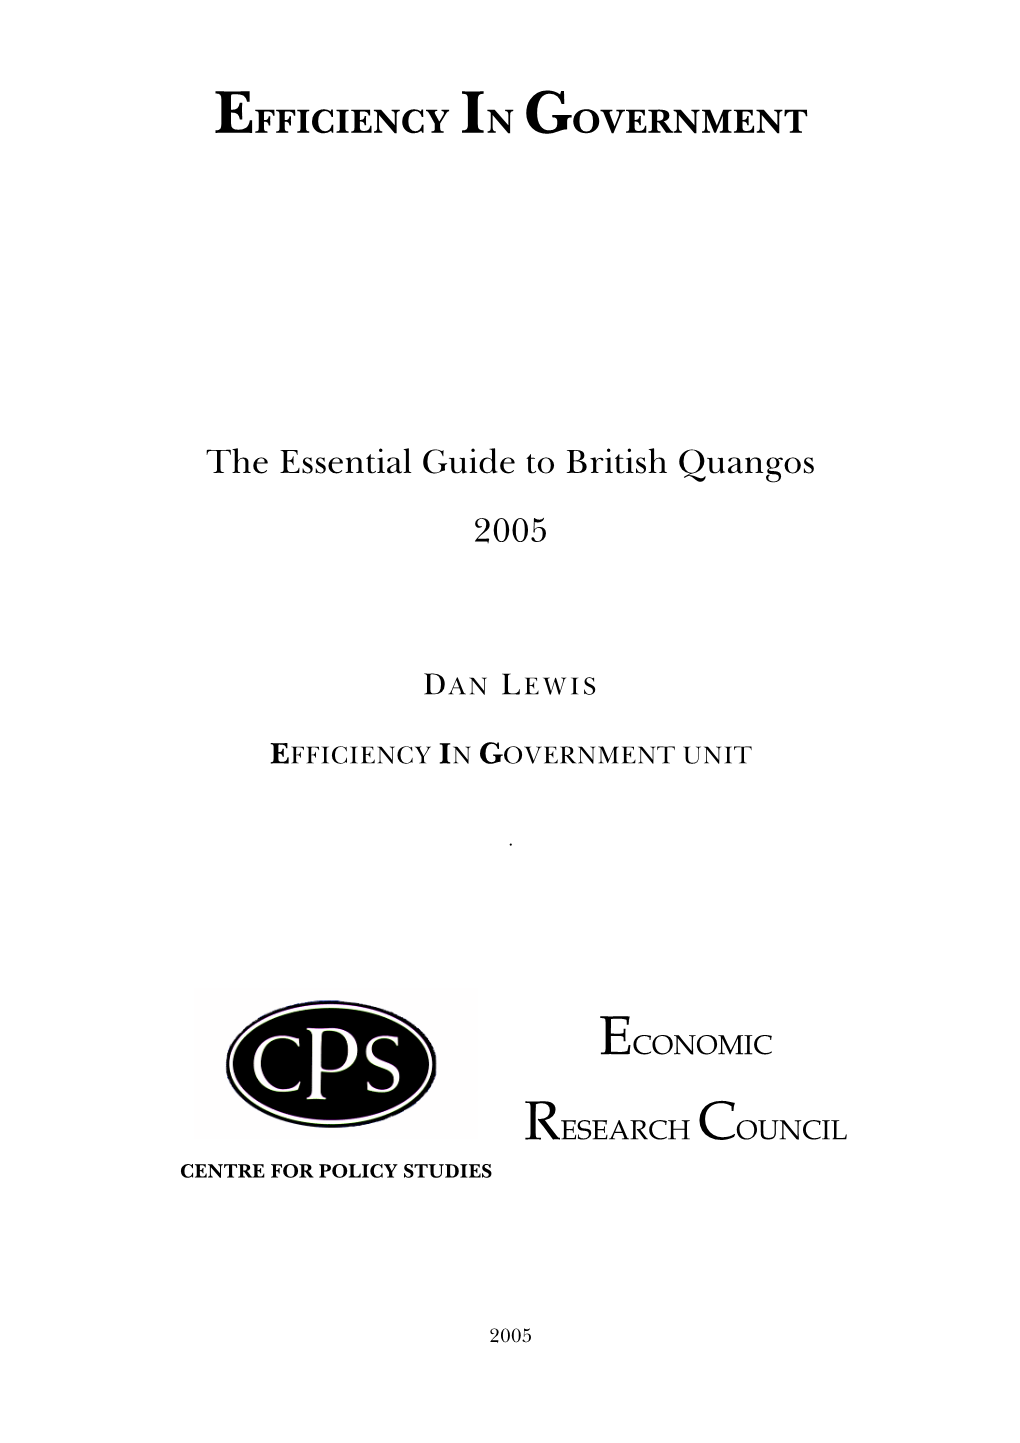 The Essential Guide to British Quangos 2005